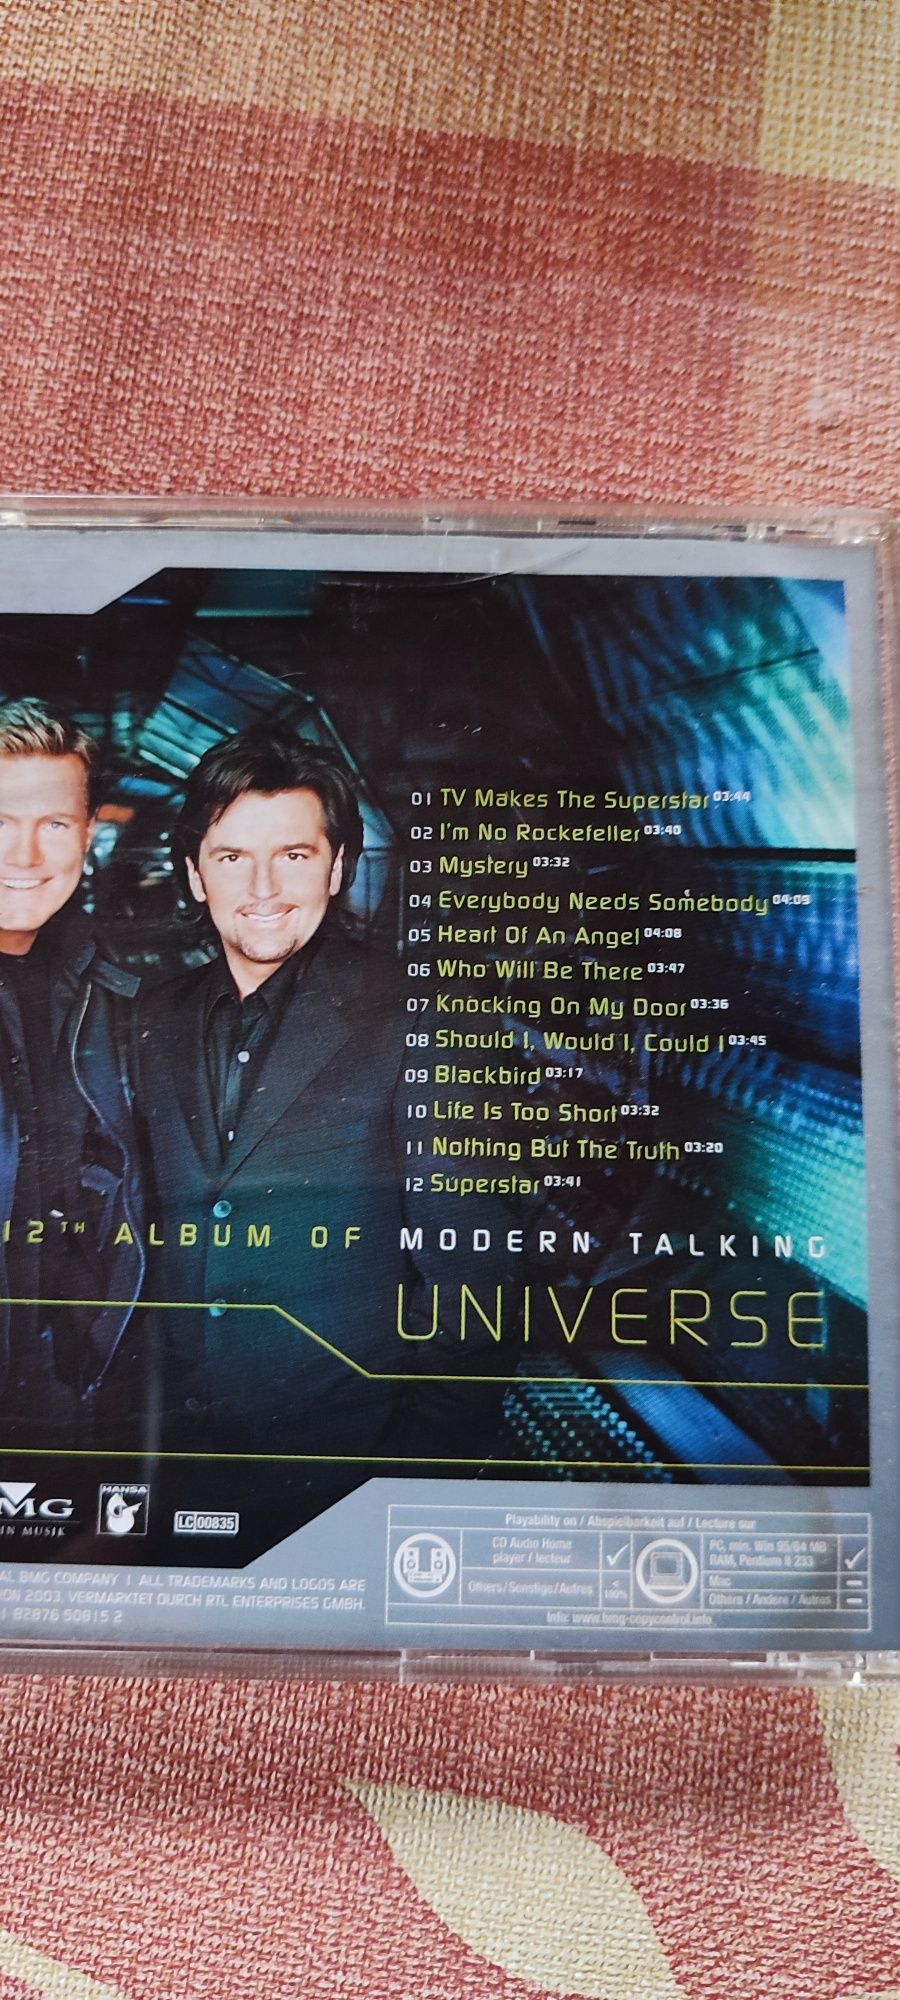 Modern Talking CD - 2 Albume.